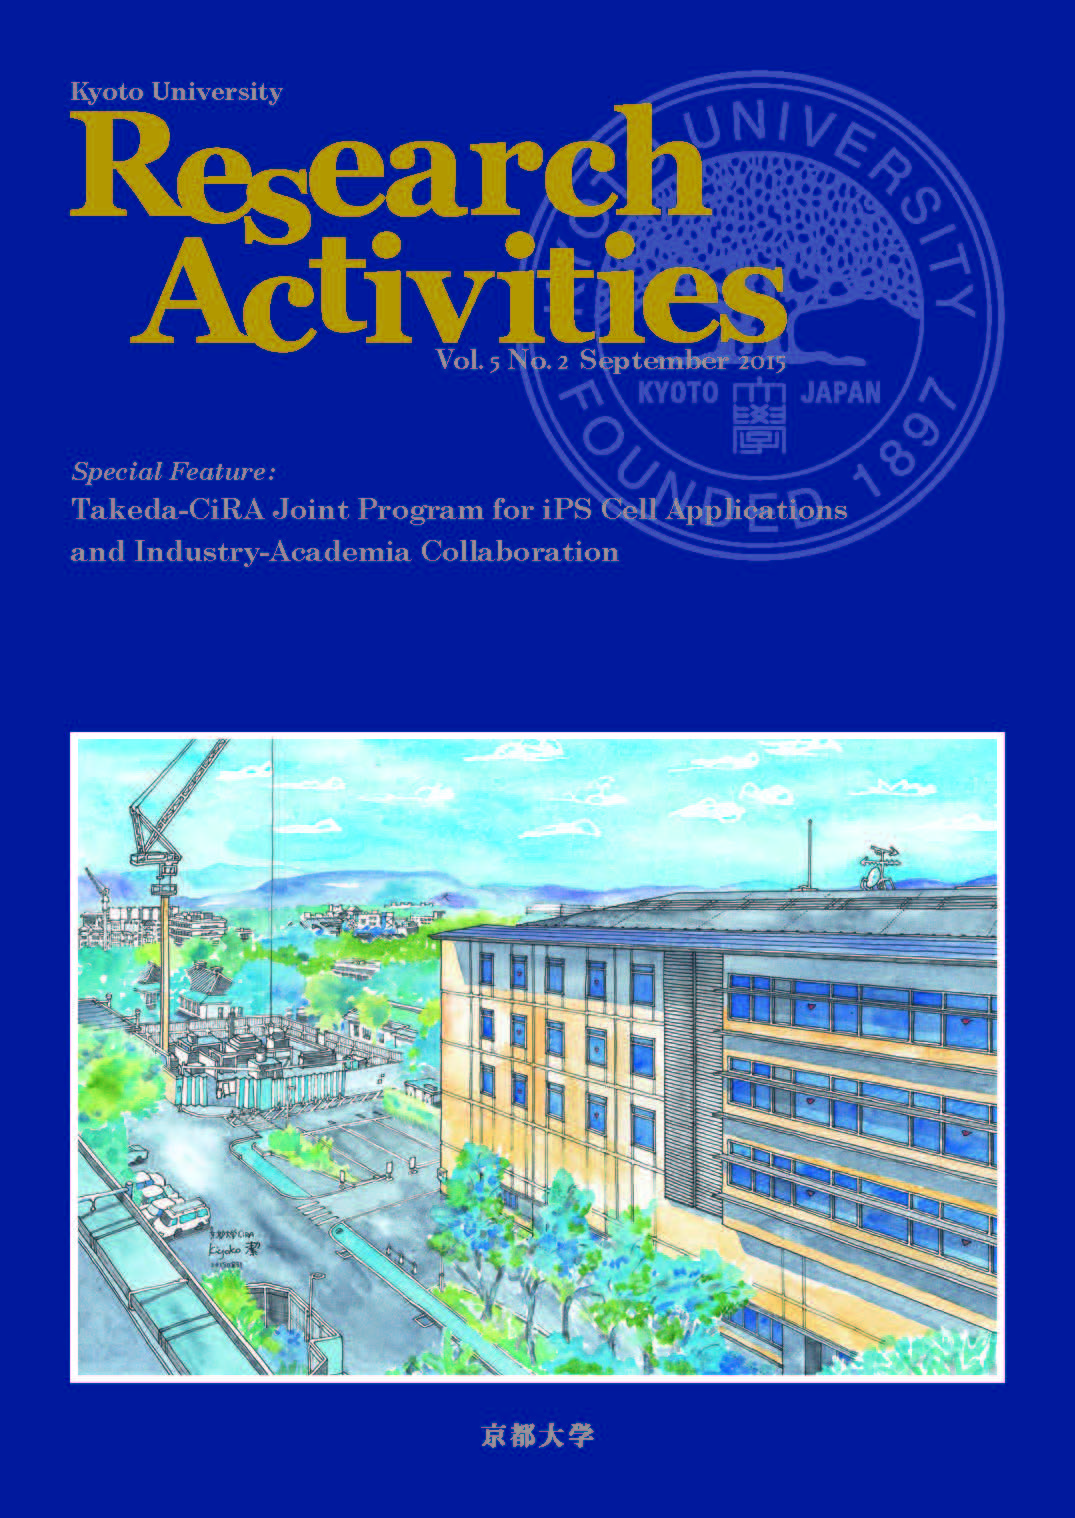 Kyoto University Research Activities Vol.5 No.2 September 2015